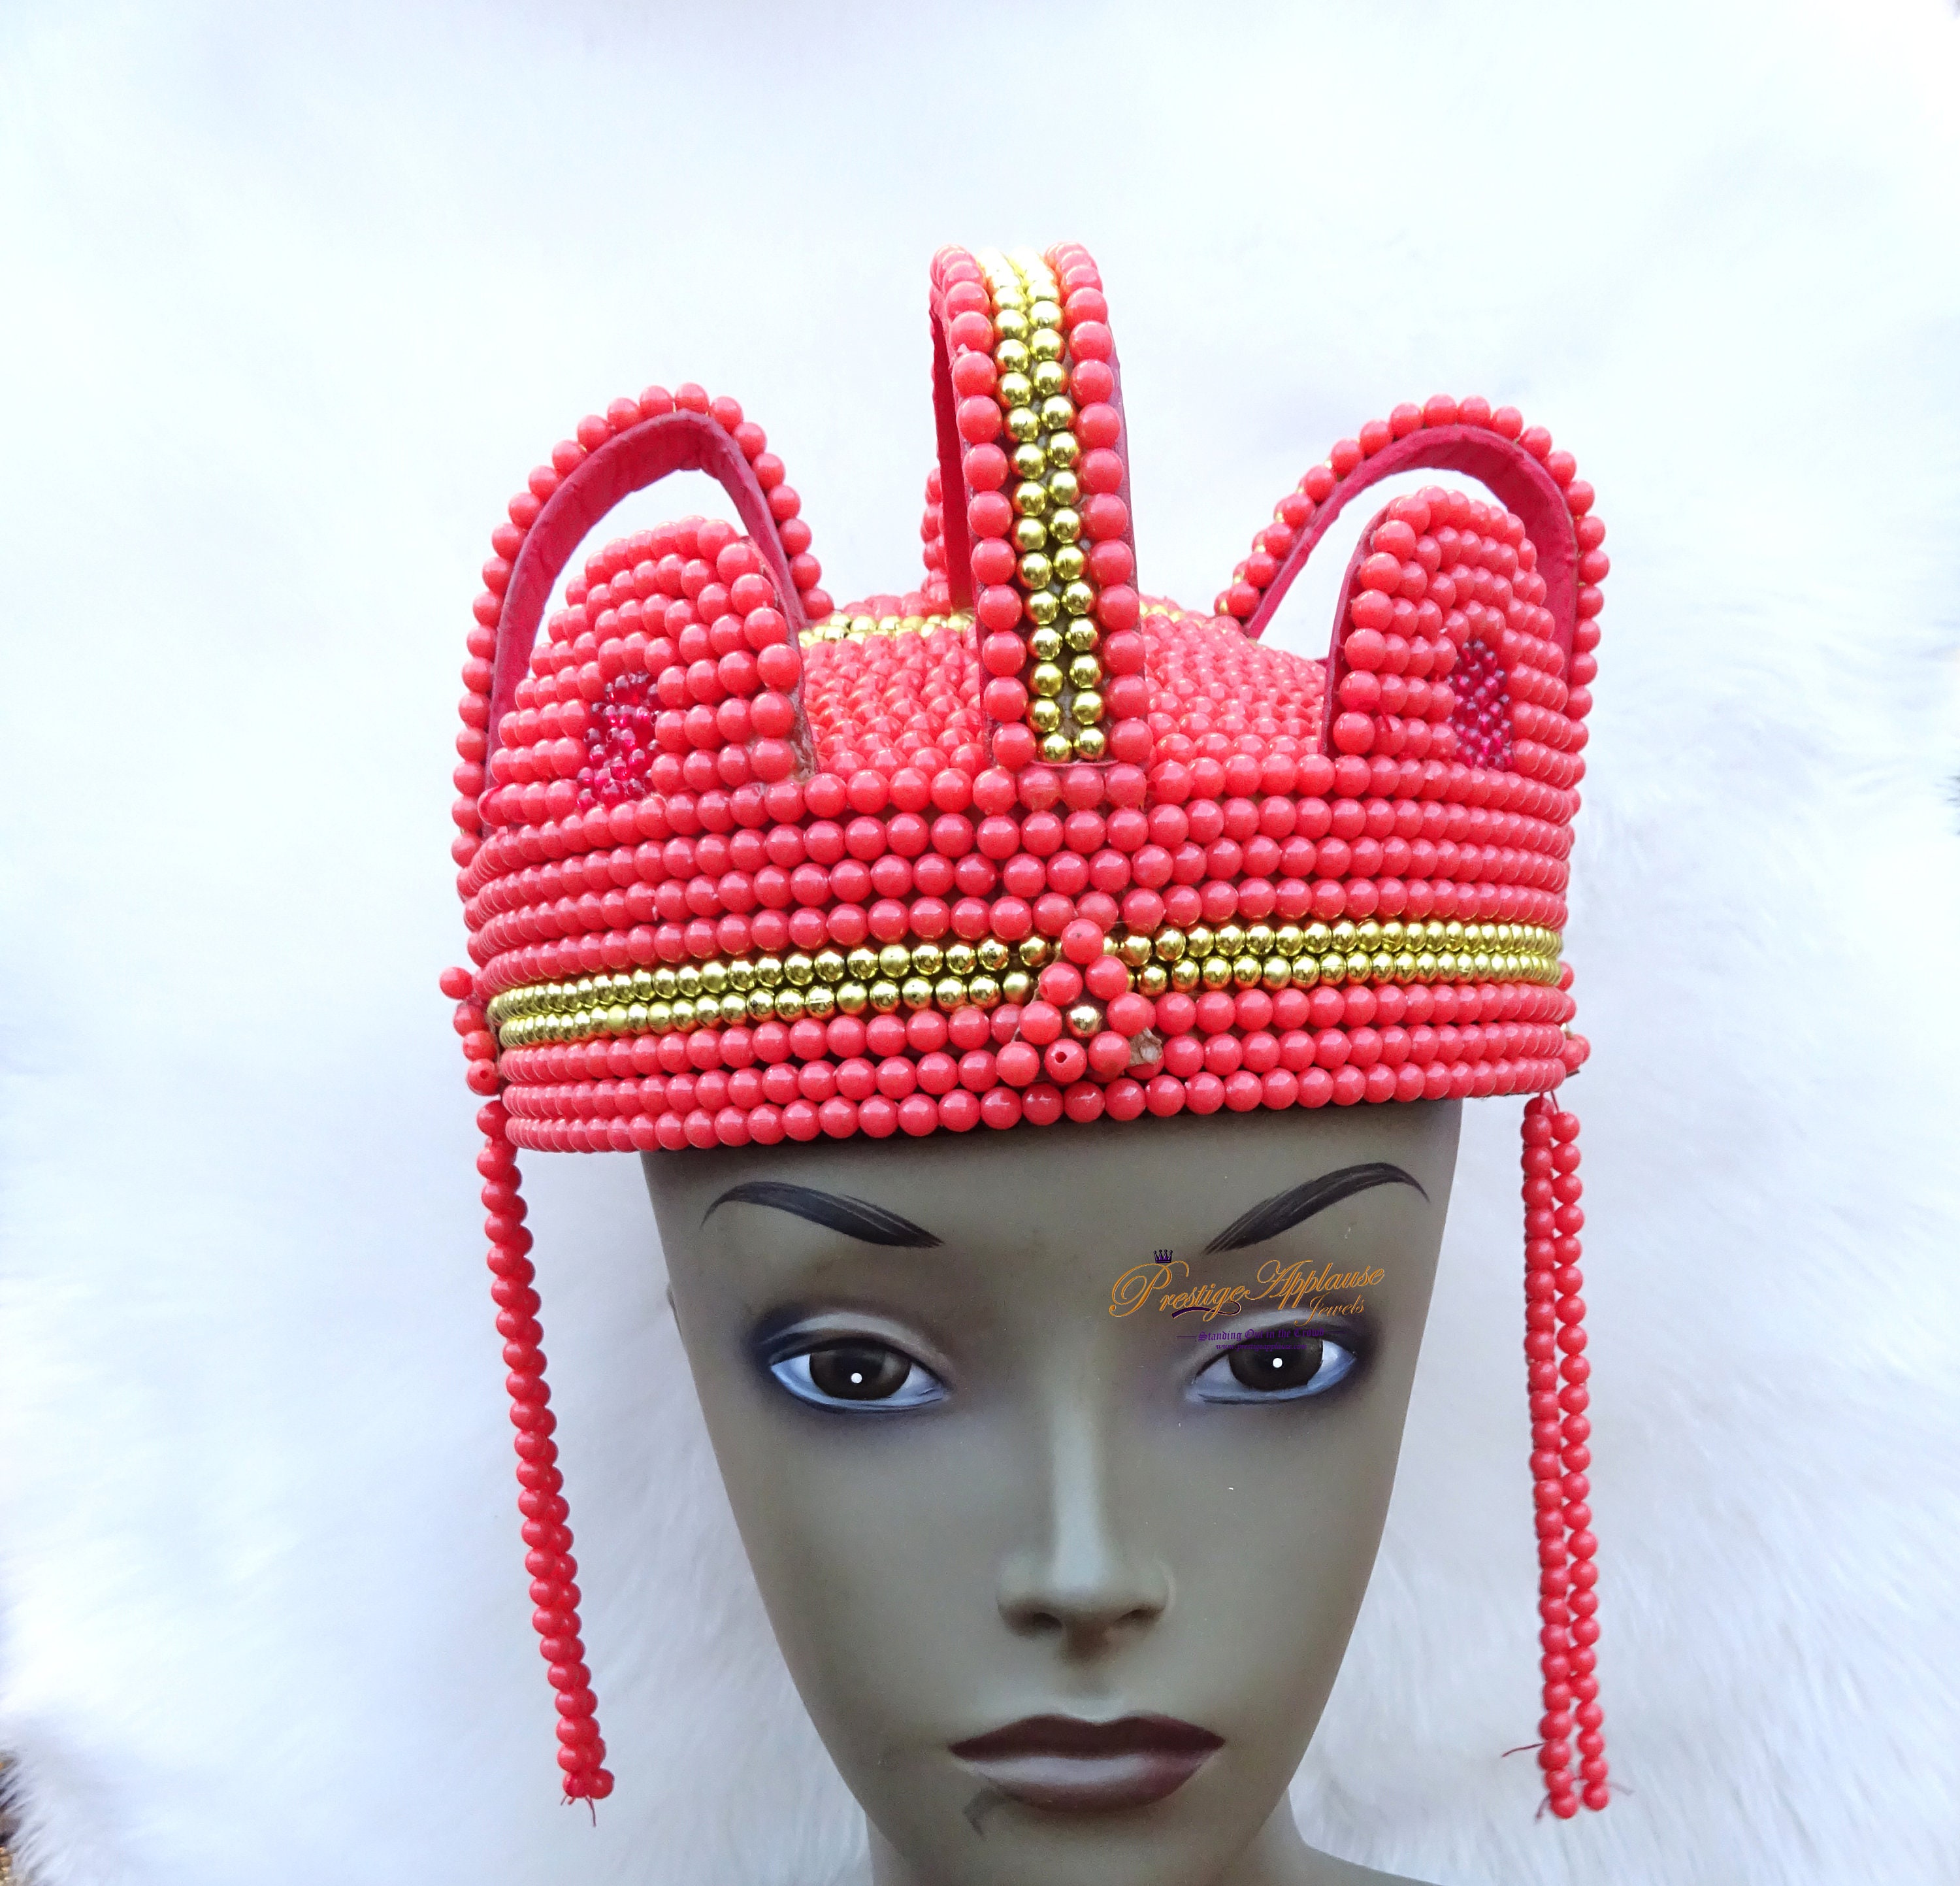 beaded hat Edo bride Crown wedding accessories,,Beinin bride traditional wedding accessories,African fashion